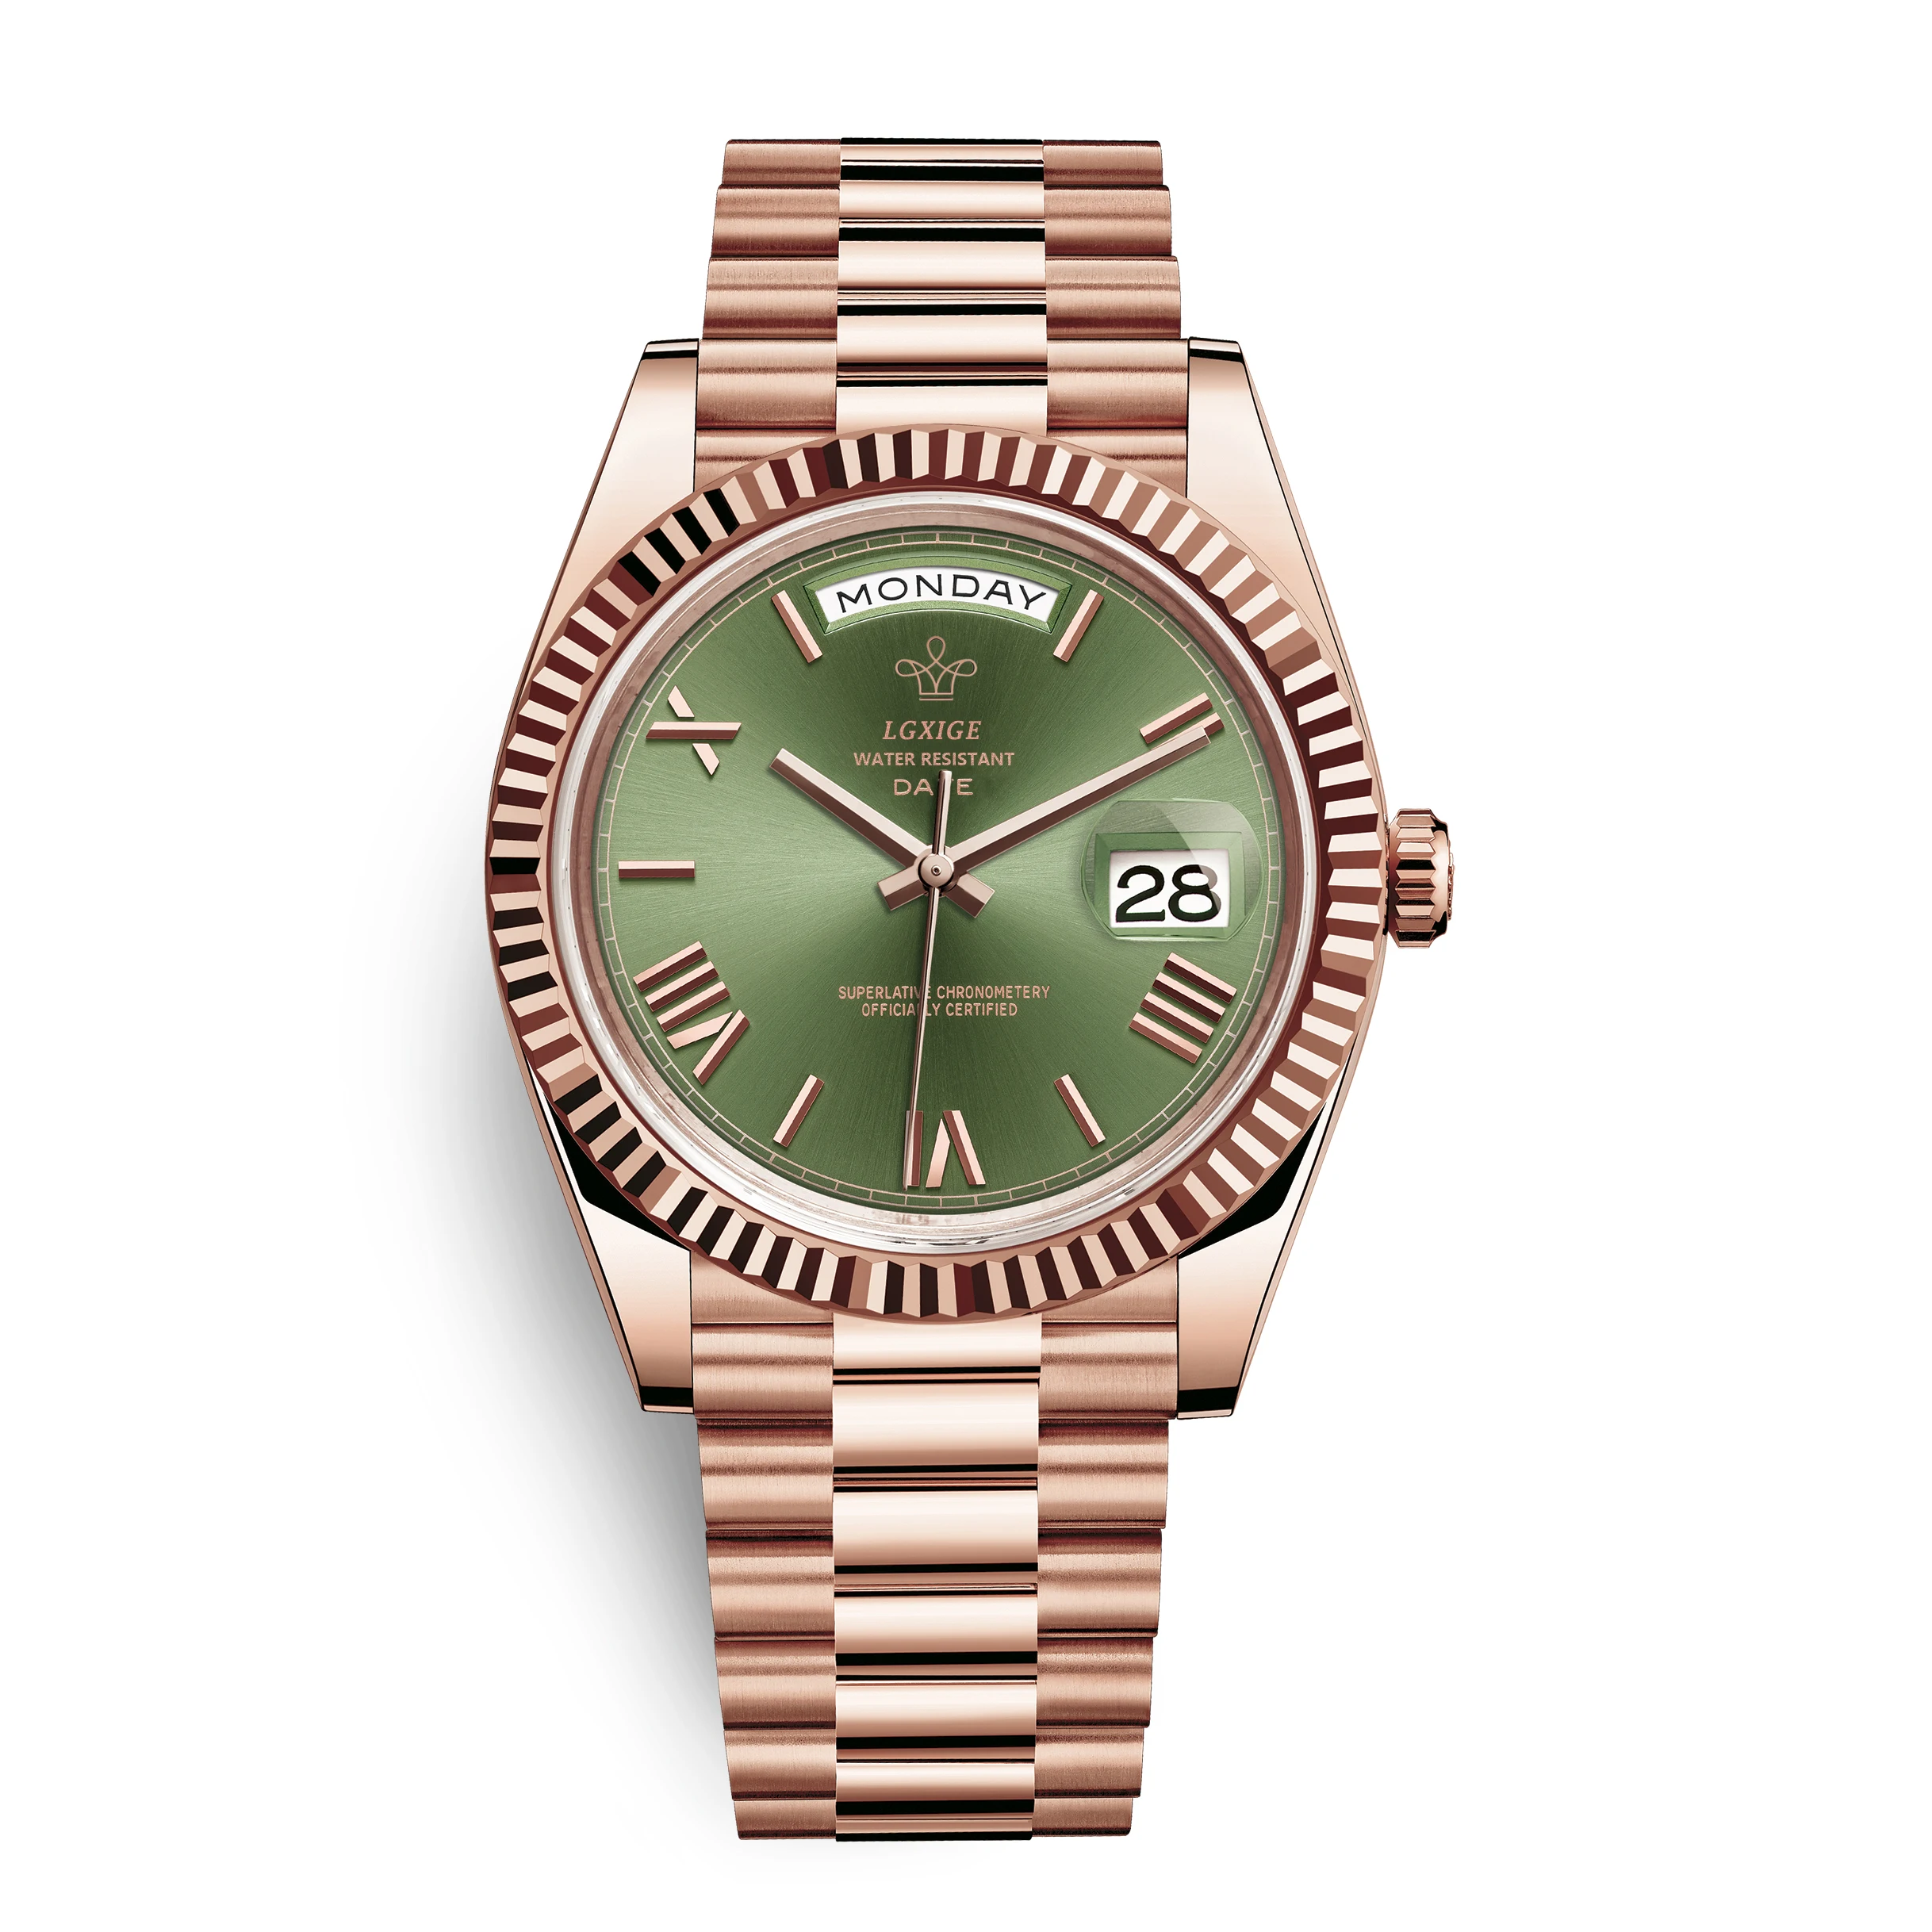 2022 New Fashion Tiffany Blue Watch Men Day Date Waterproof Wrist Watch For Men Top Brand Luxury aaa Miyota Quartz Casual Clock -S1992fb24bebb4a4fbeaf022029f4d7c6X